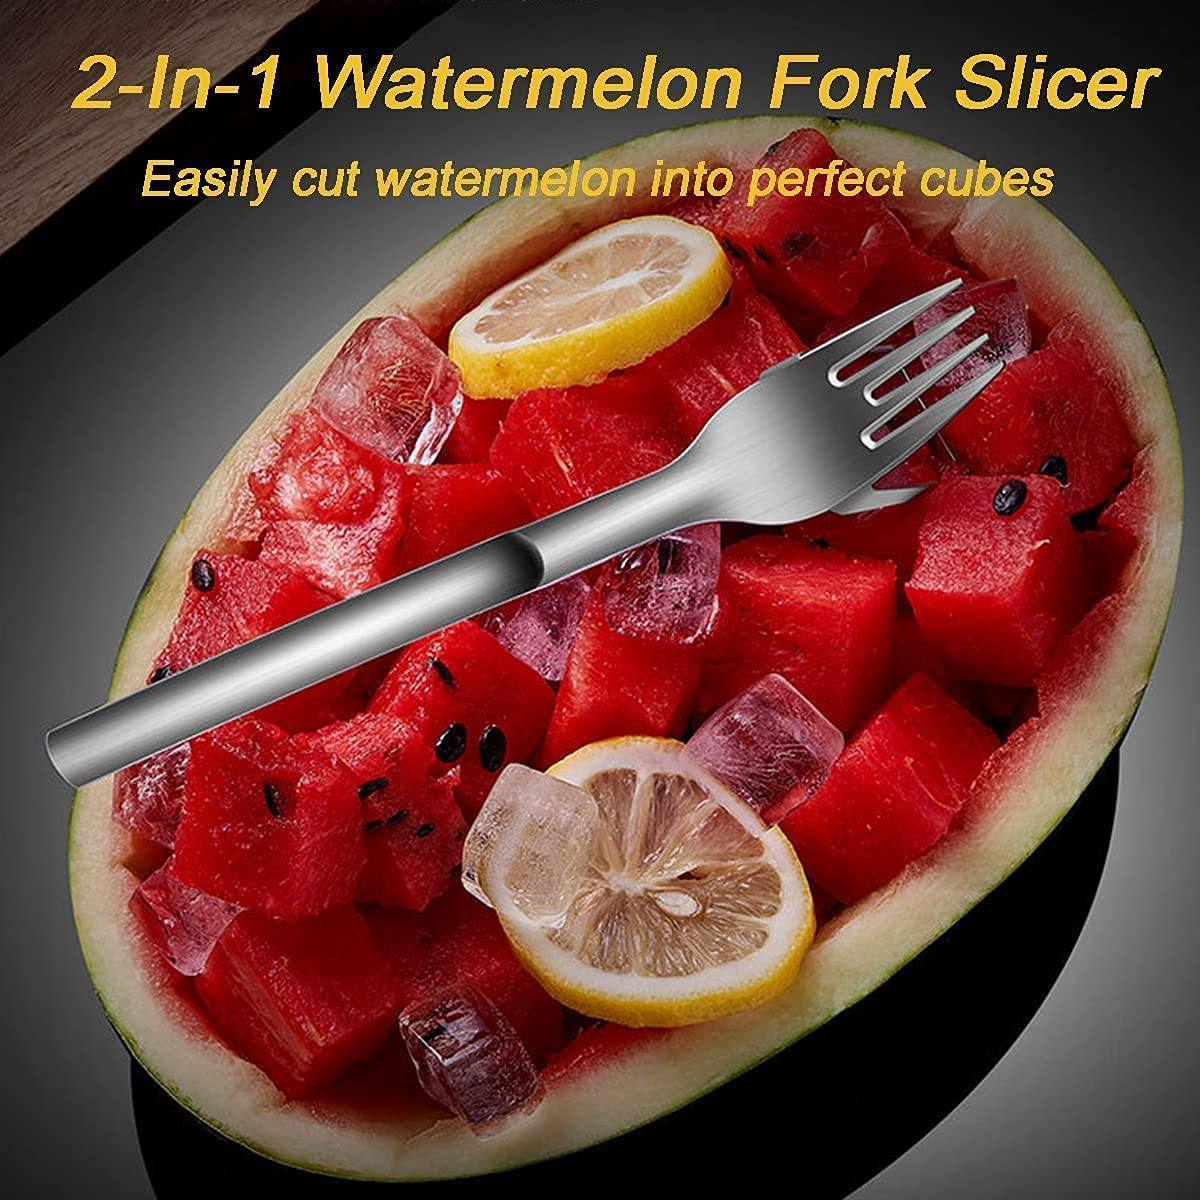 2-in-1 Watermelon Fork Slicer, Watermelon Slicer Cutter, Stainless